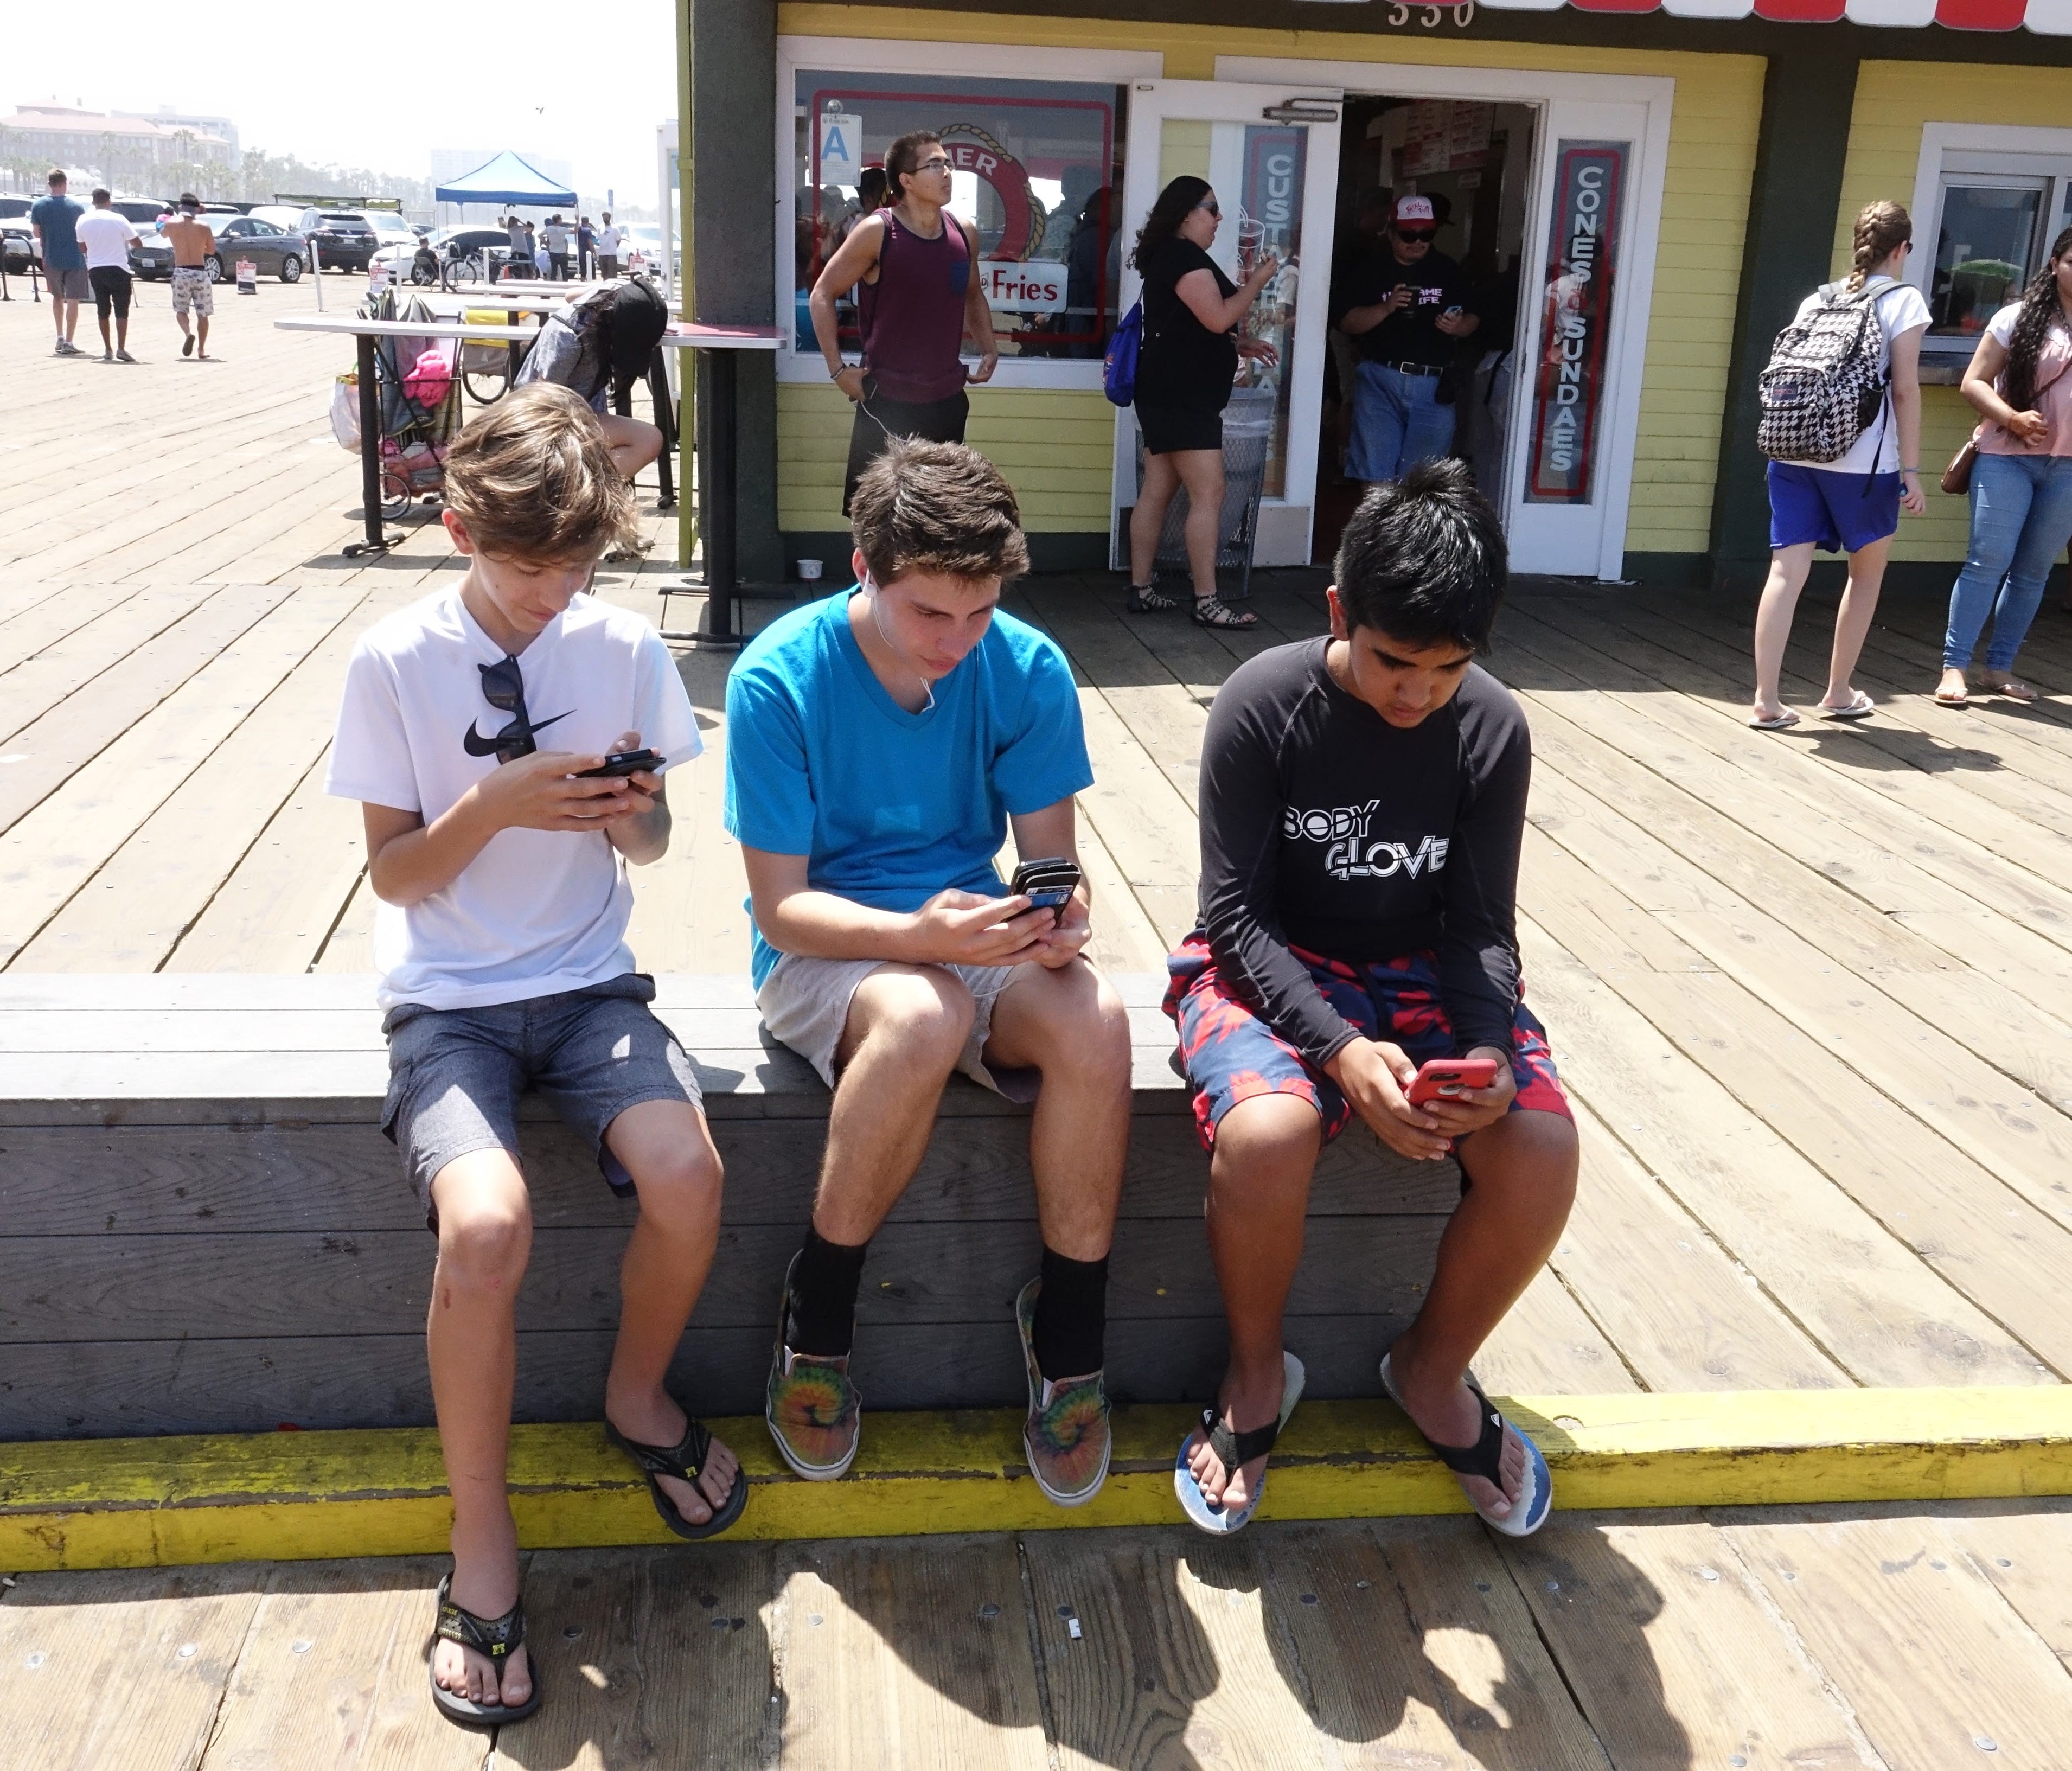 Brothers Lance and Max Santana and Ryan Reinoso play Pokemon Go at the Santa Monica Pier.